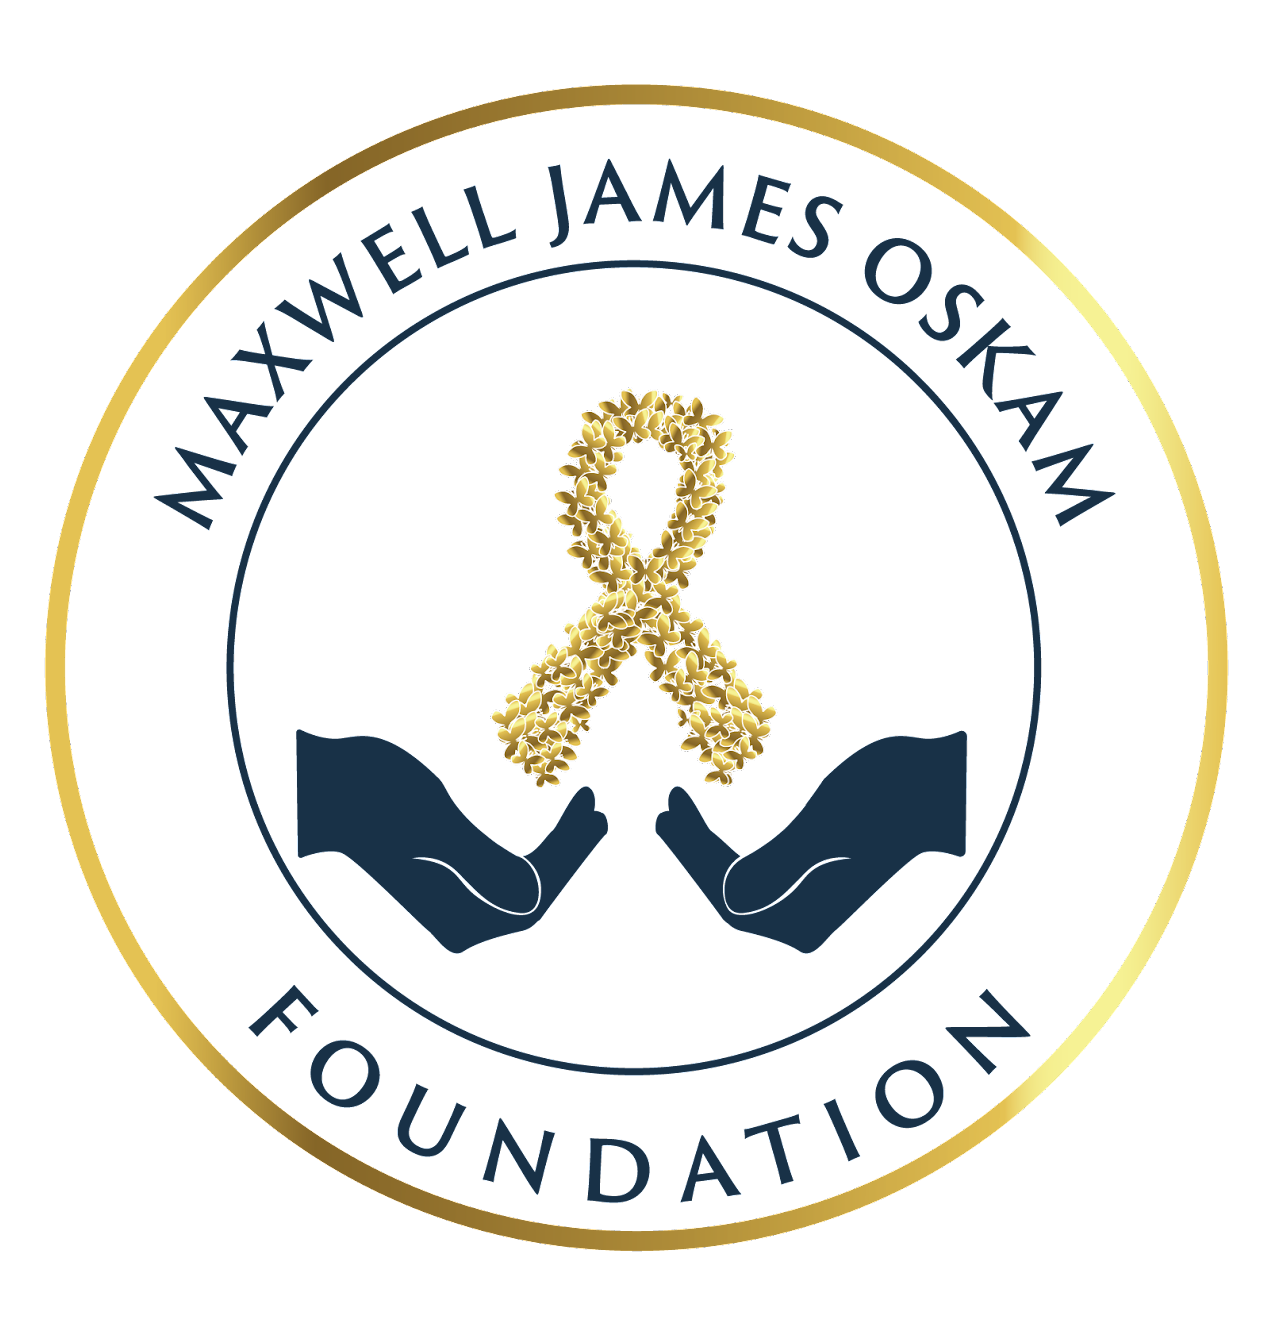 Maxwell James Oskam Foundation